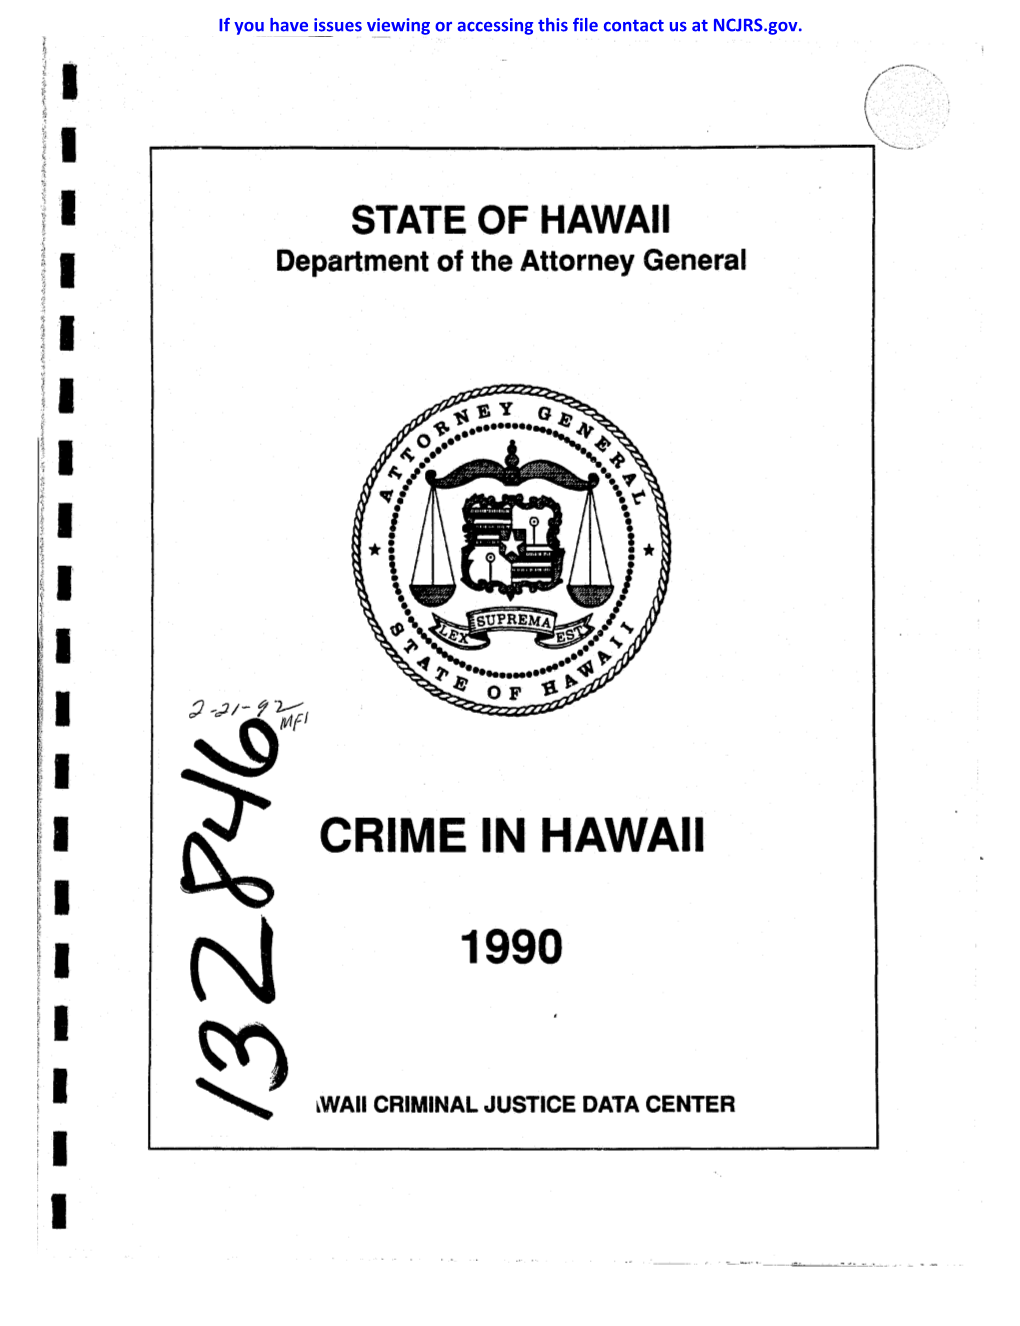 Crime in Hawaii